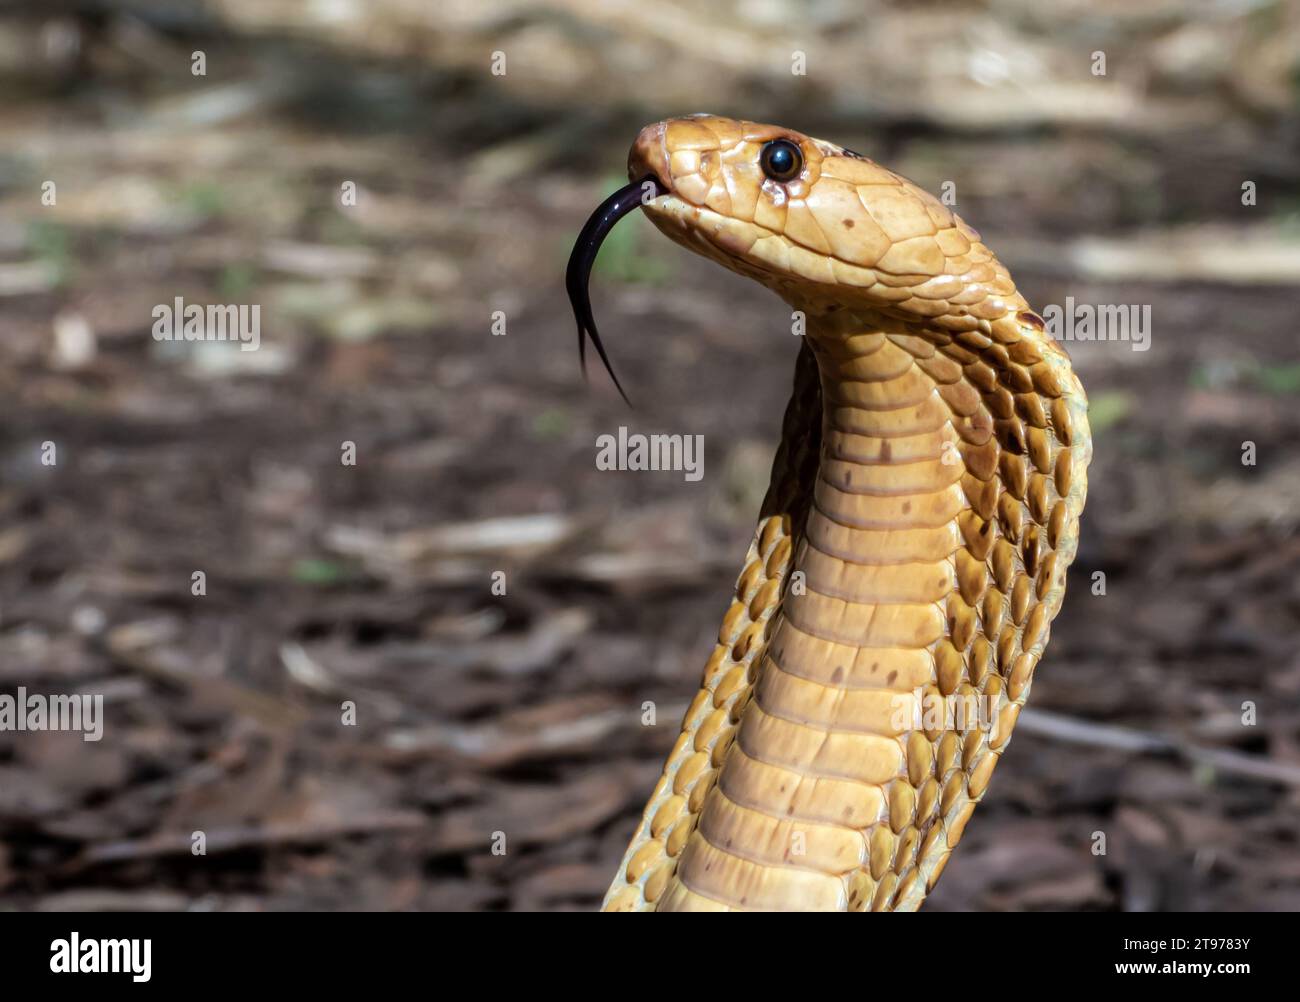 A vivid close-up photograph of a Cape cobra snake in a grassy meadow, (Naja nivea) Stock Photo